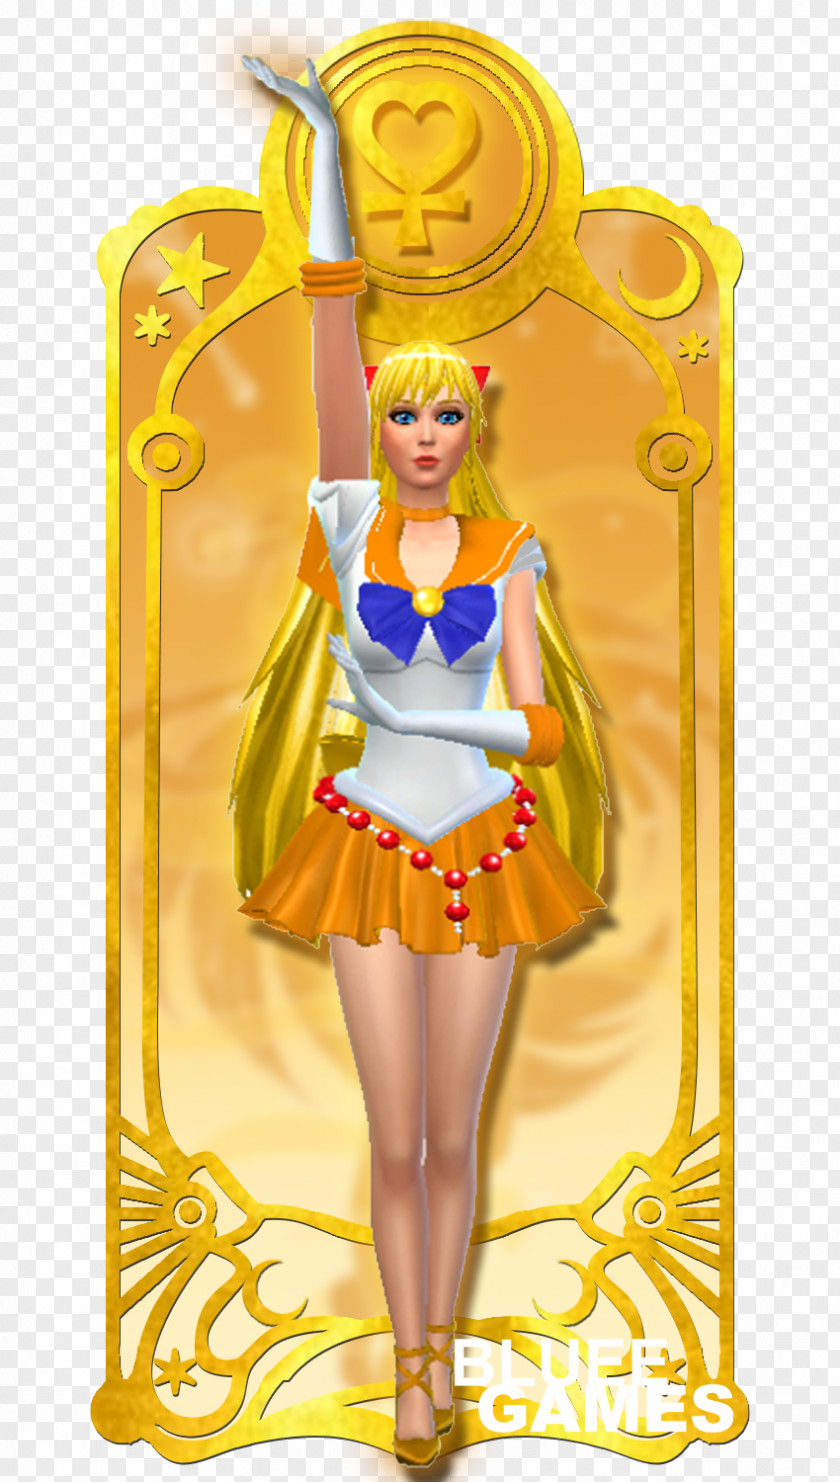 Sailor Moon Venus Costume Image Illustration PNG